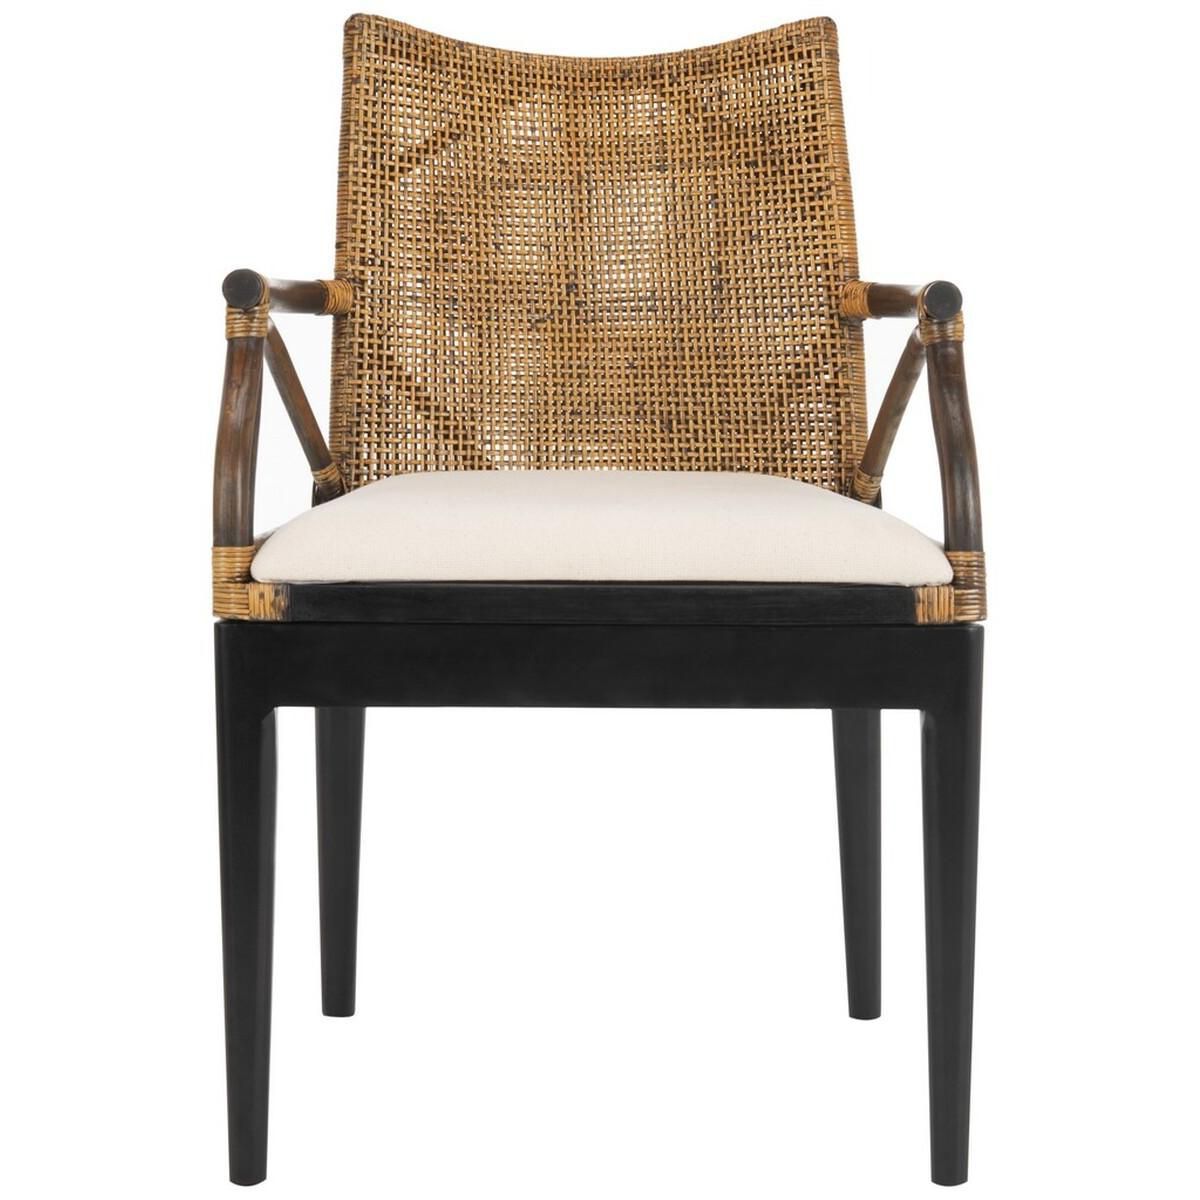 Gianni Arm Chair - Brown/Black - Safavieh. | Target